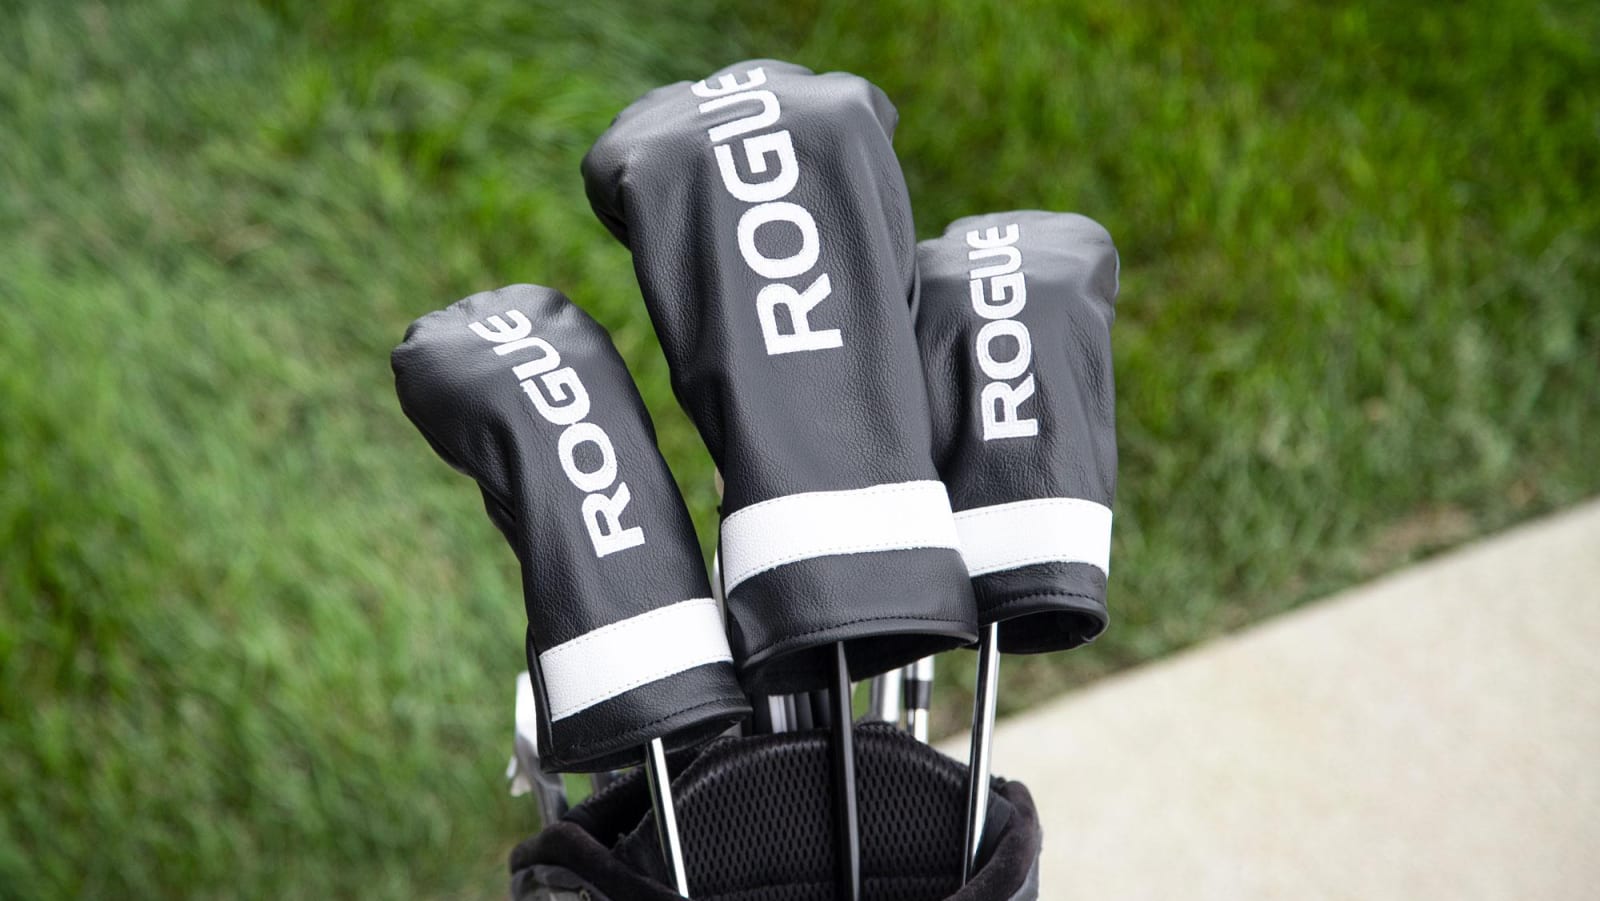 Rogue Golf Club Head Covers